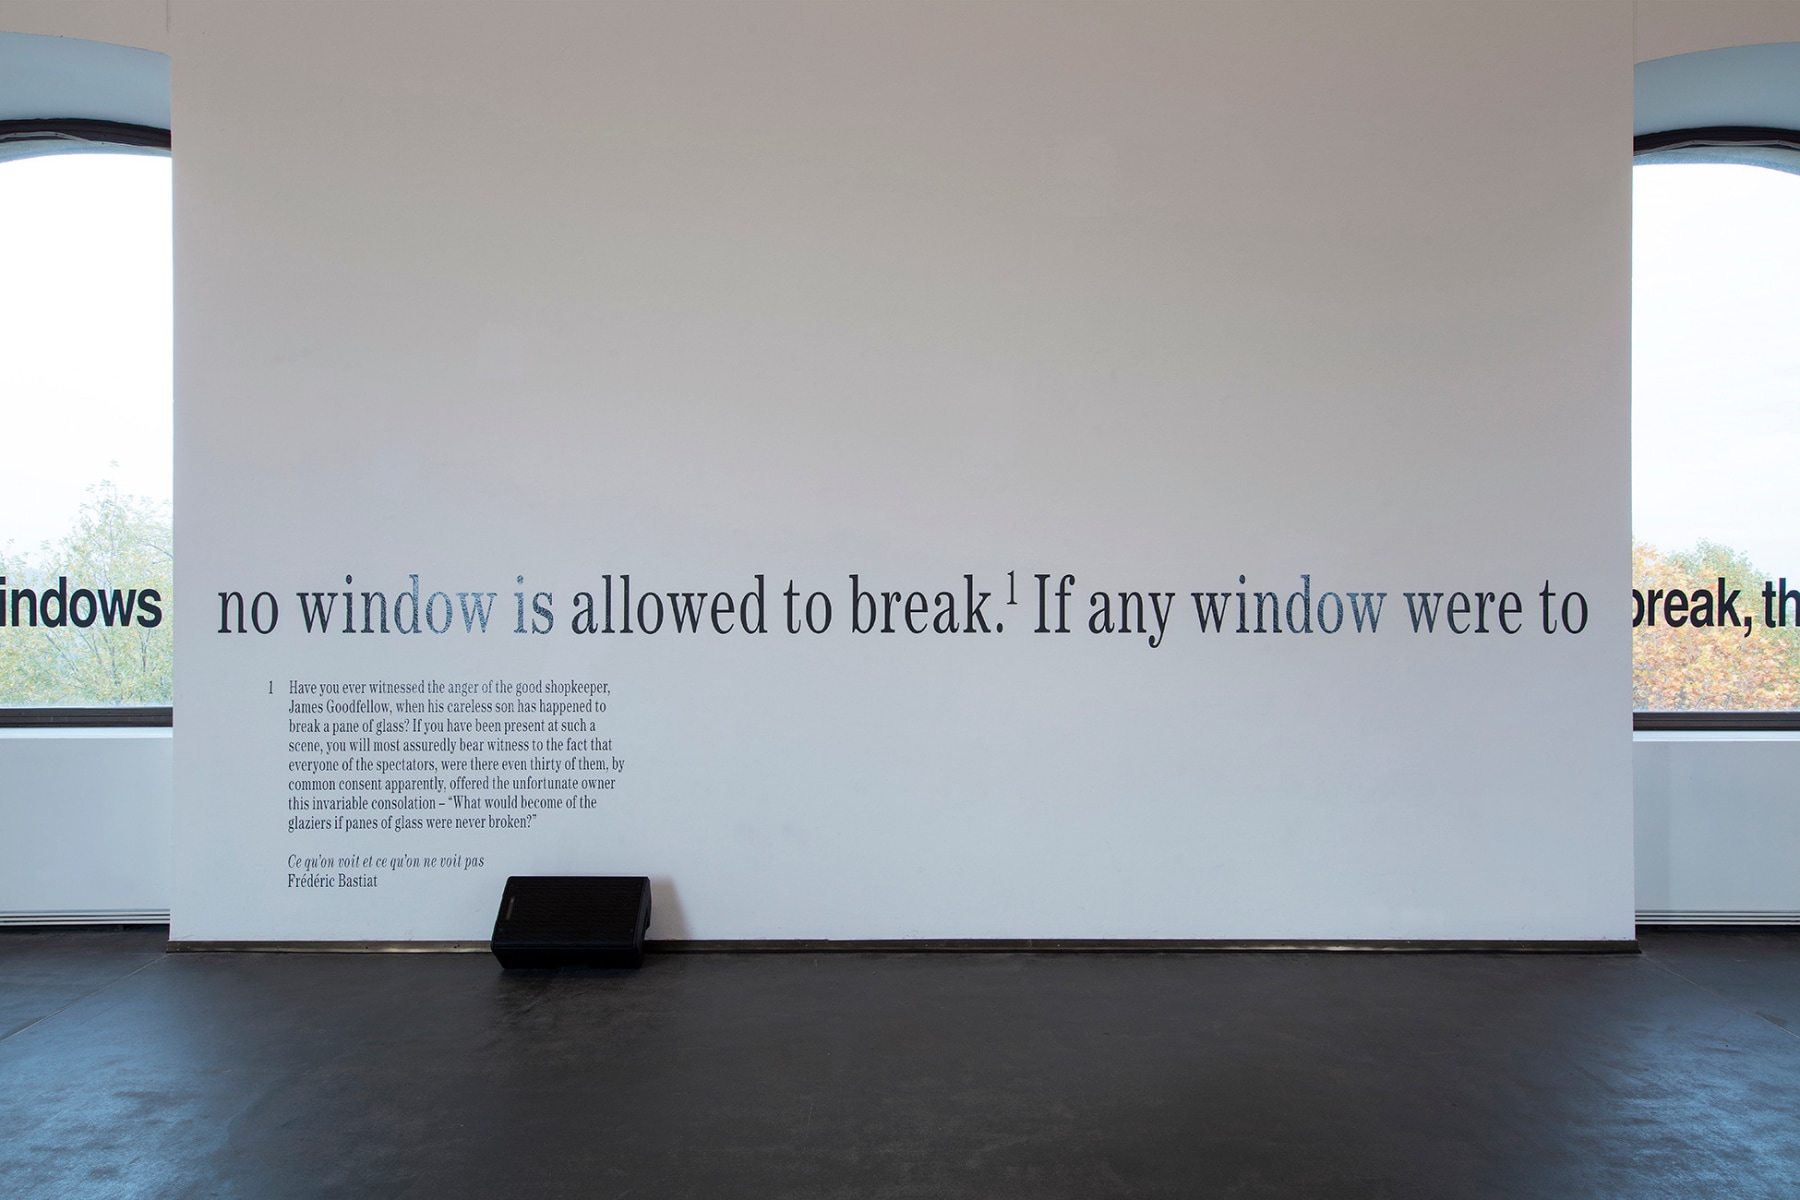 Hito Steyerl,&nbsp;The City of Broken Windows, November 1, 2018 - June 30, 2019,&nbsp;Castello di Rivoli, Torino